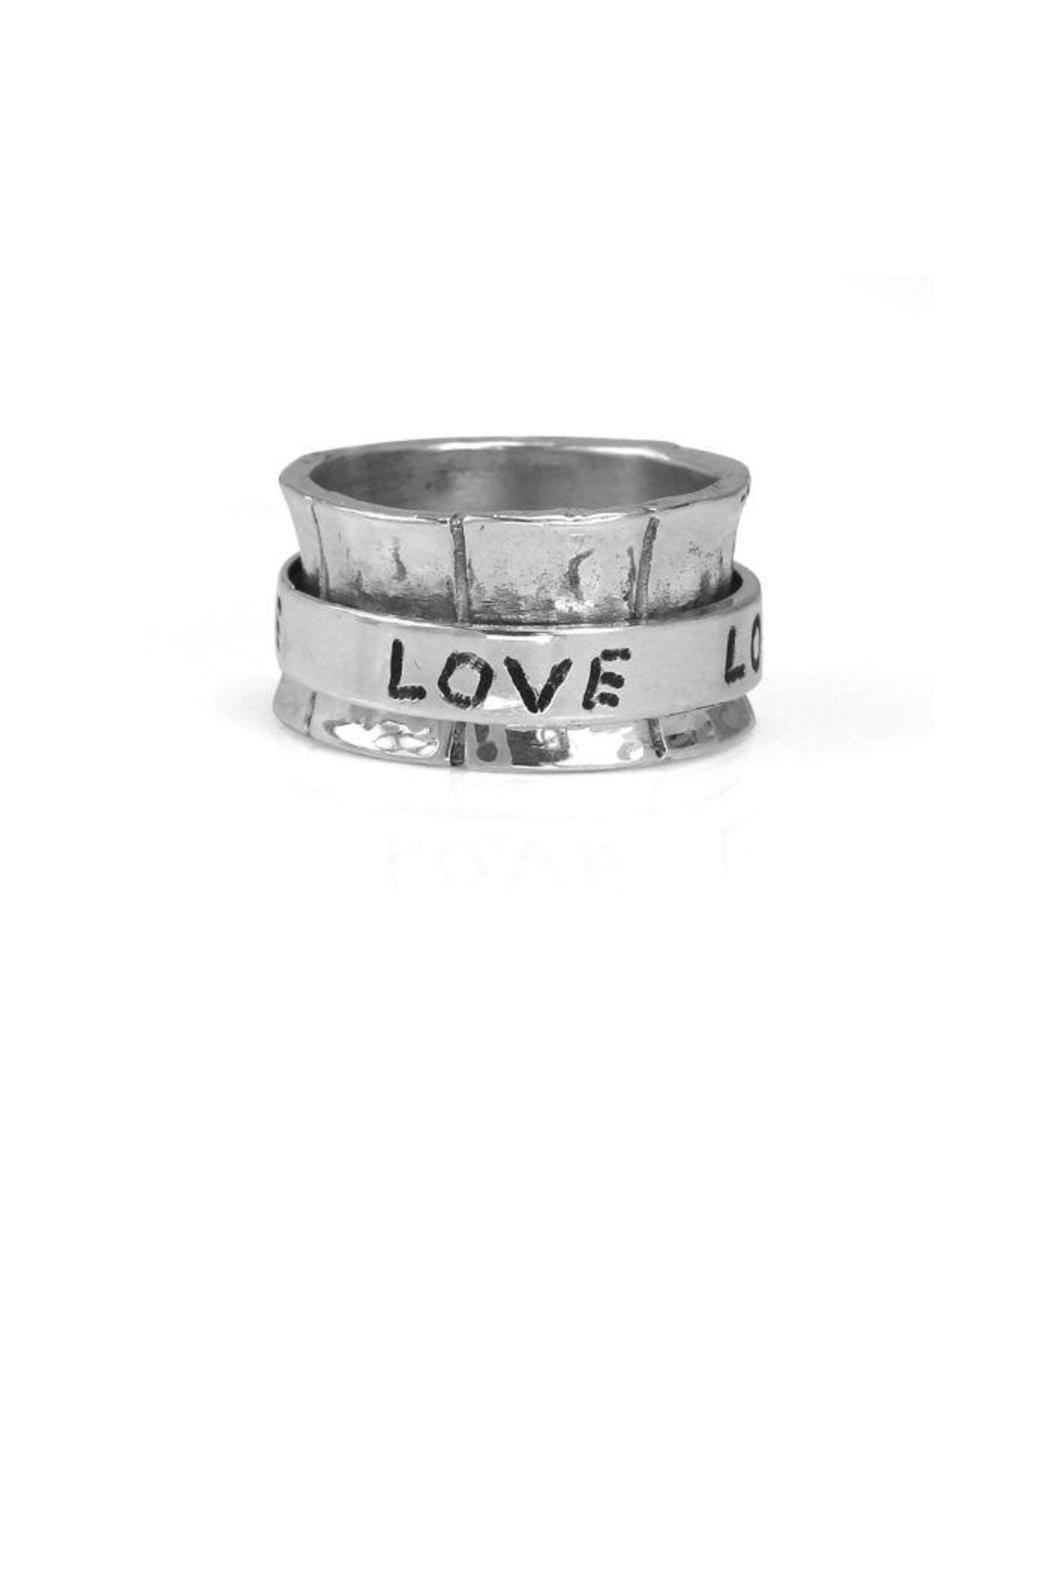 Love Meditation Ring. Sterling Silver. Size 6.